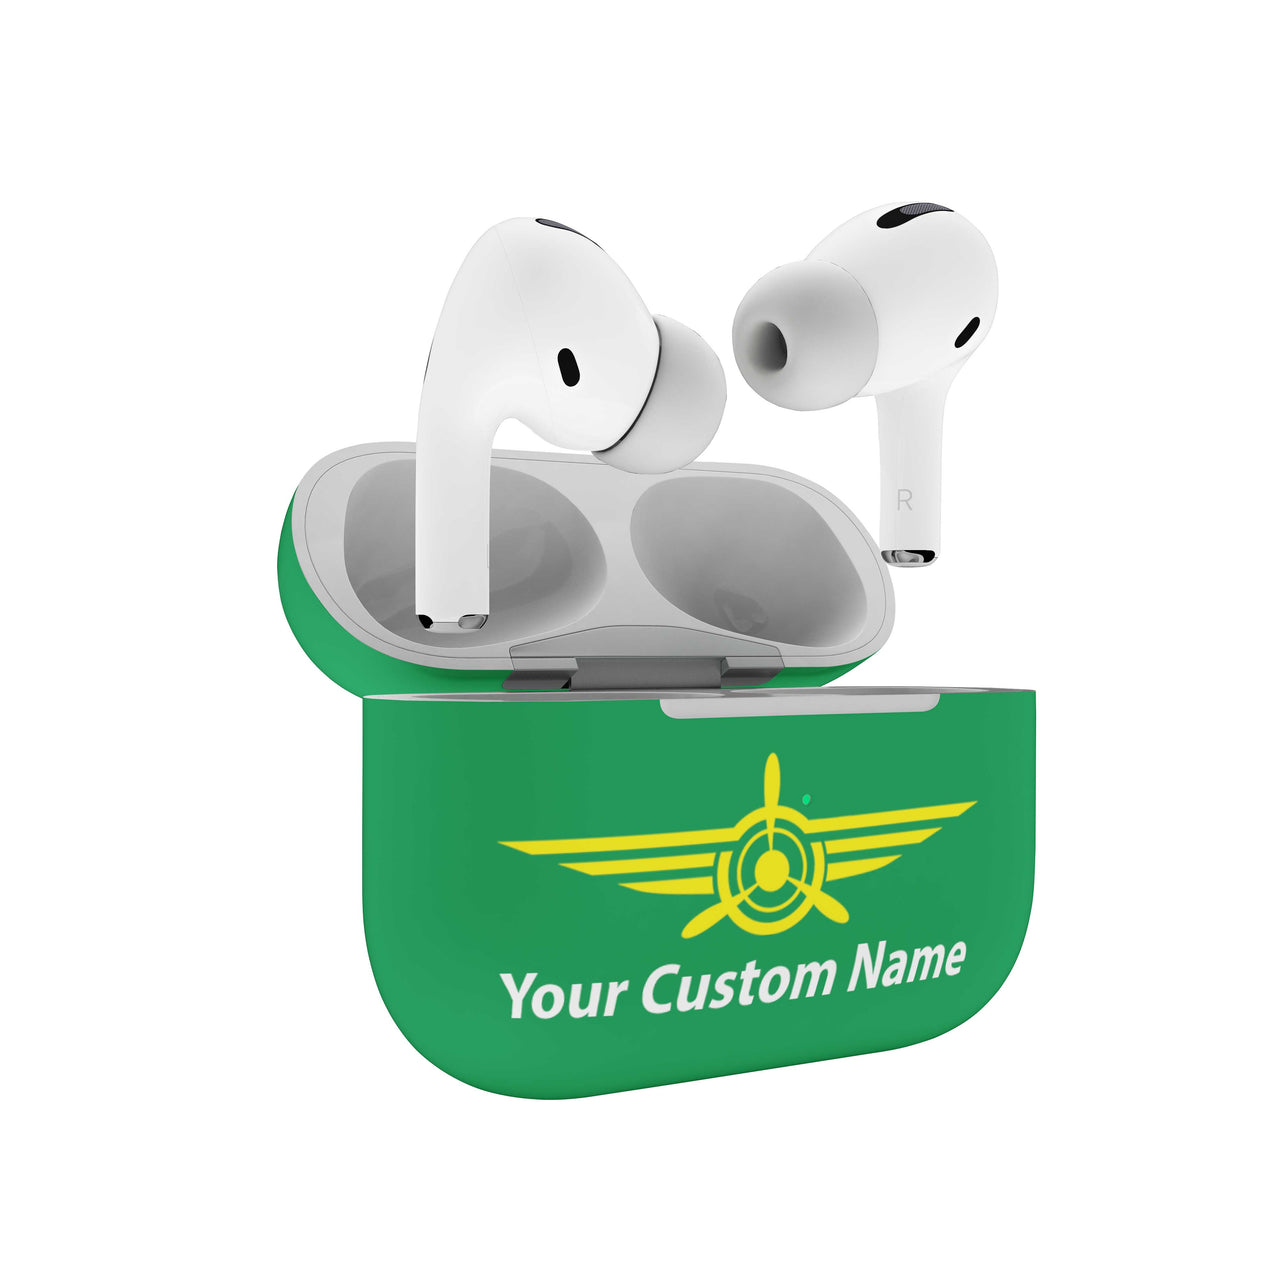 Custom Name (Badge 3) Designed Airpods "Pro" Cases